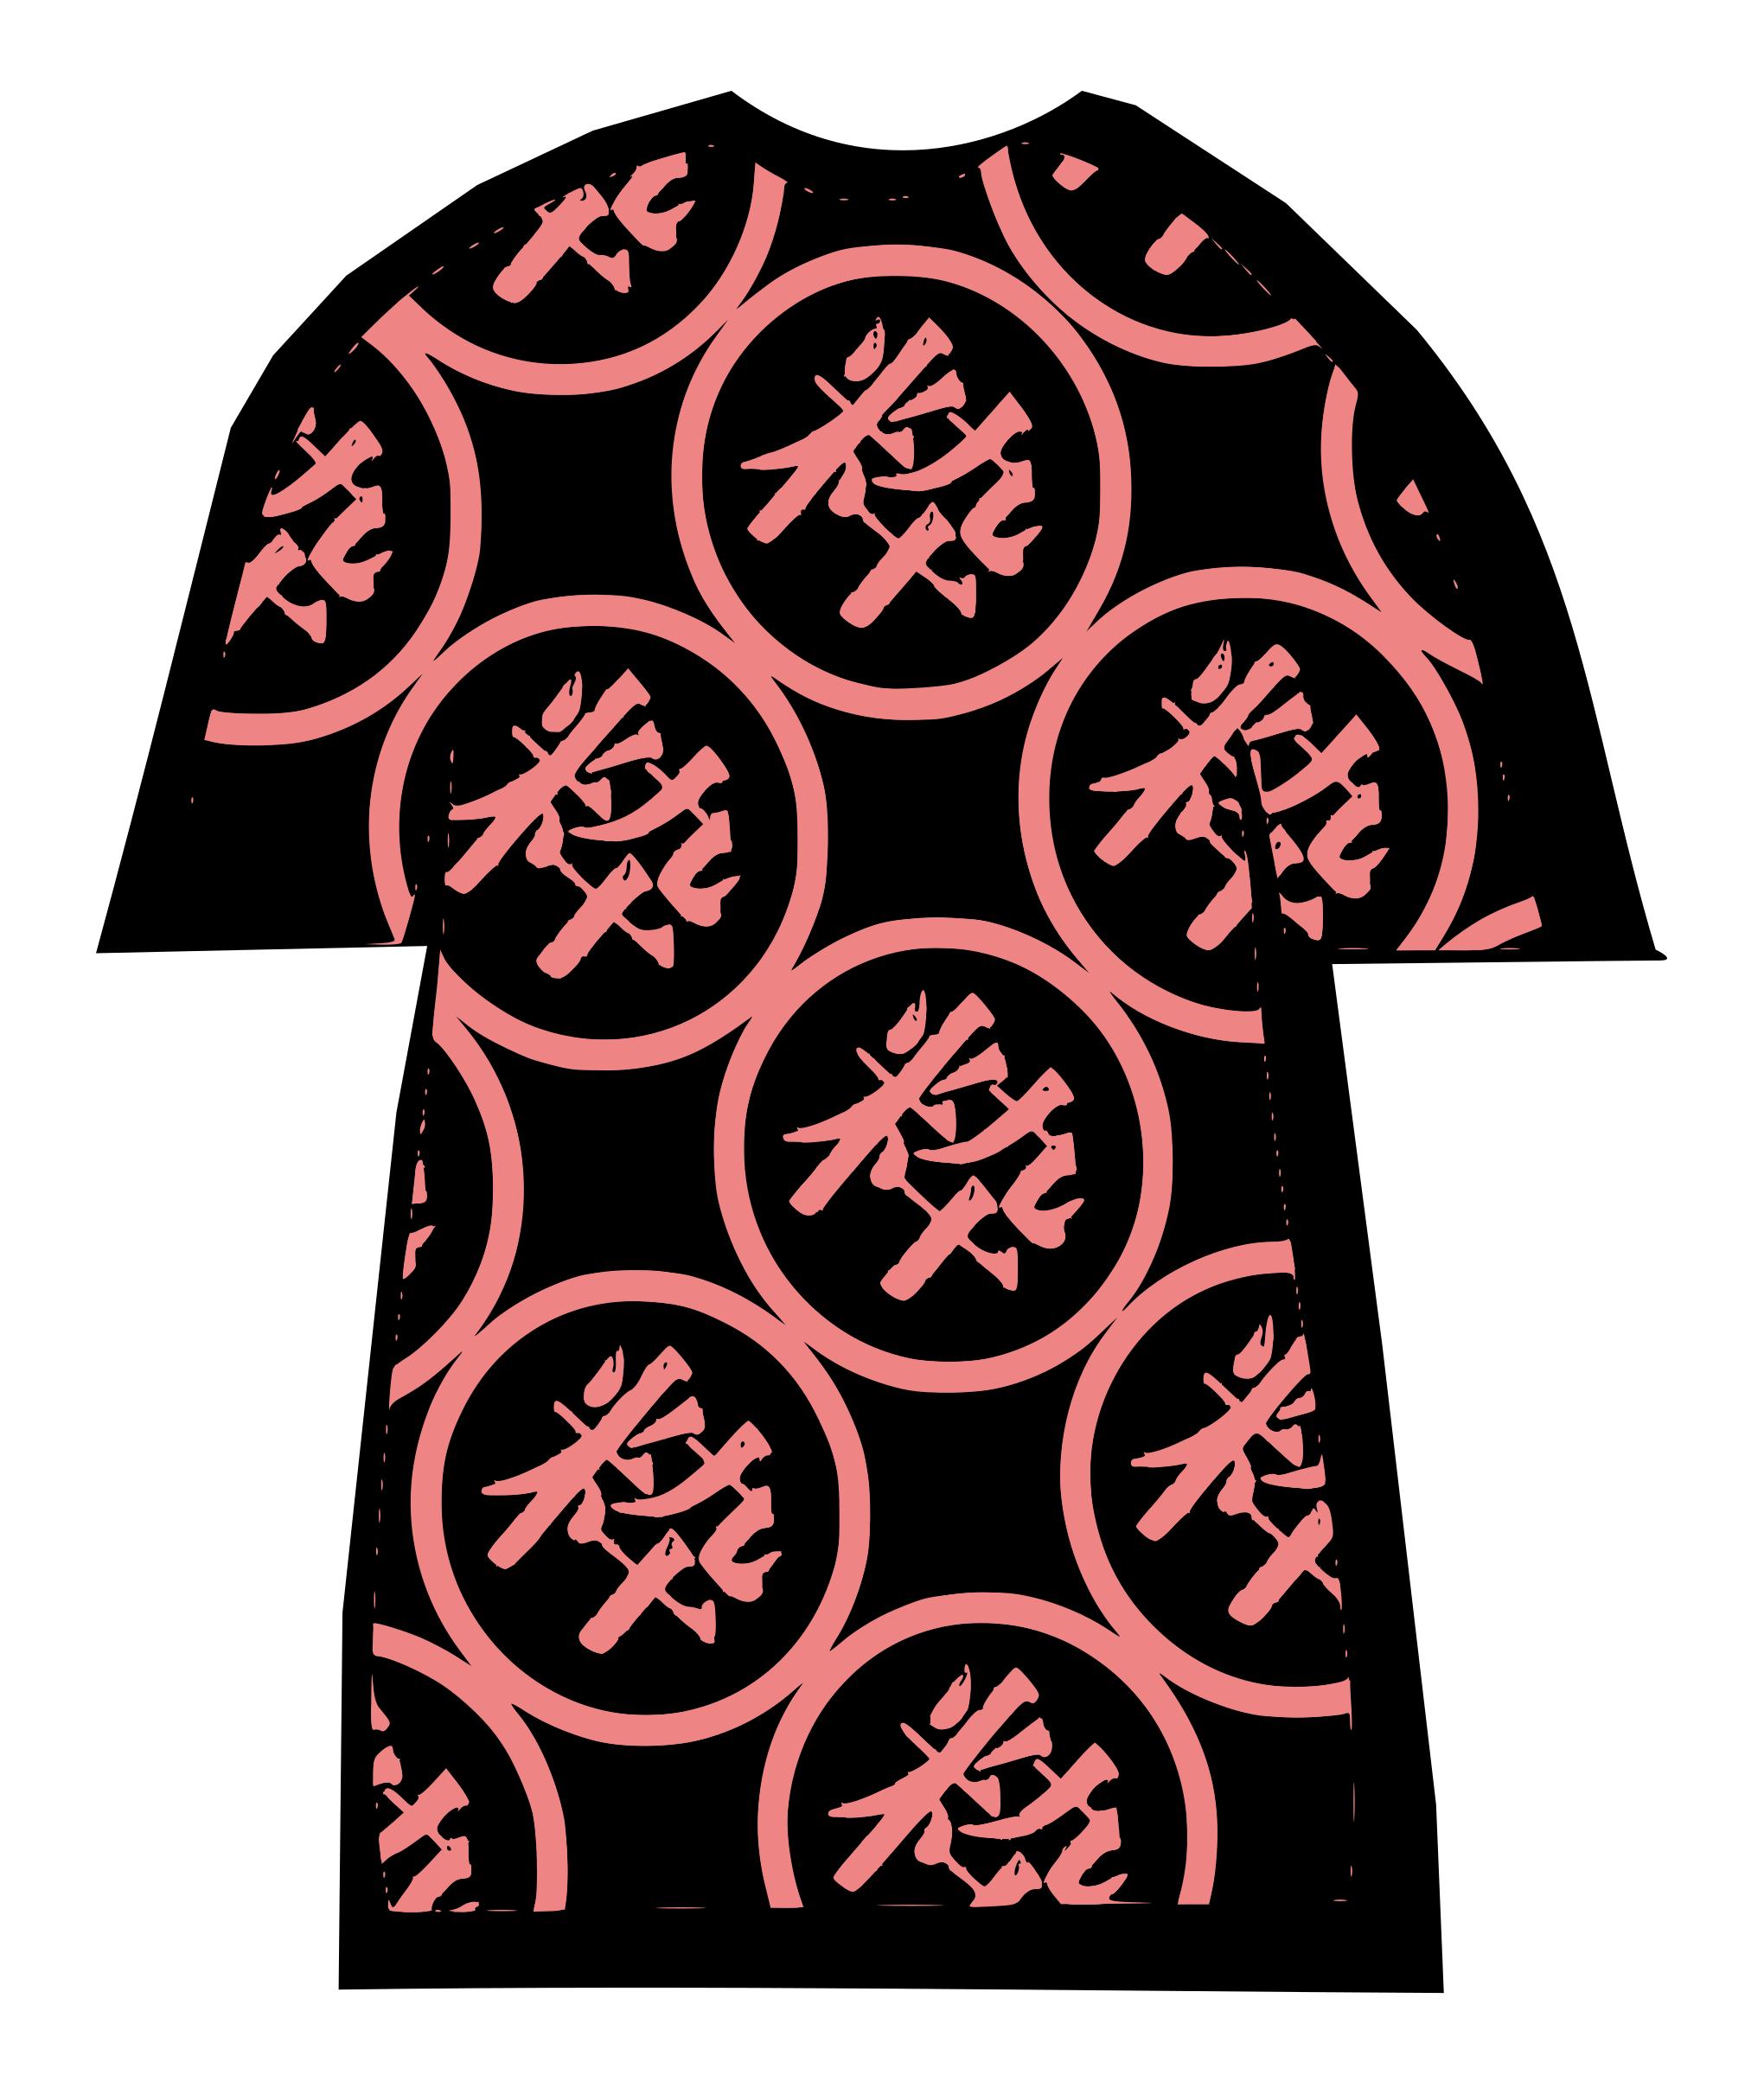 Tshirt-kanji png